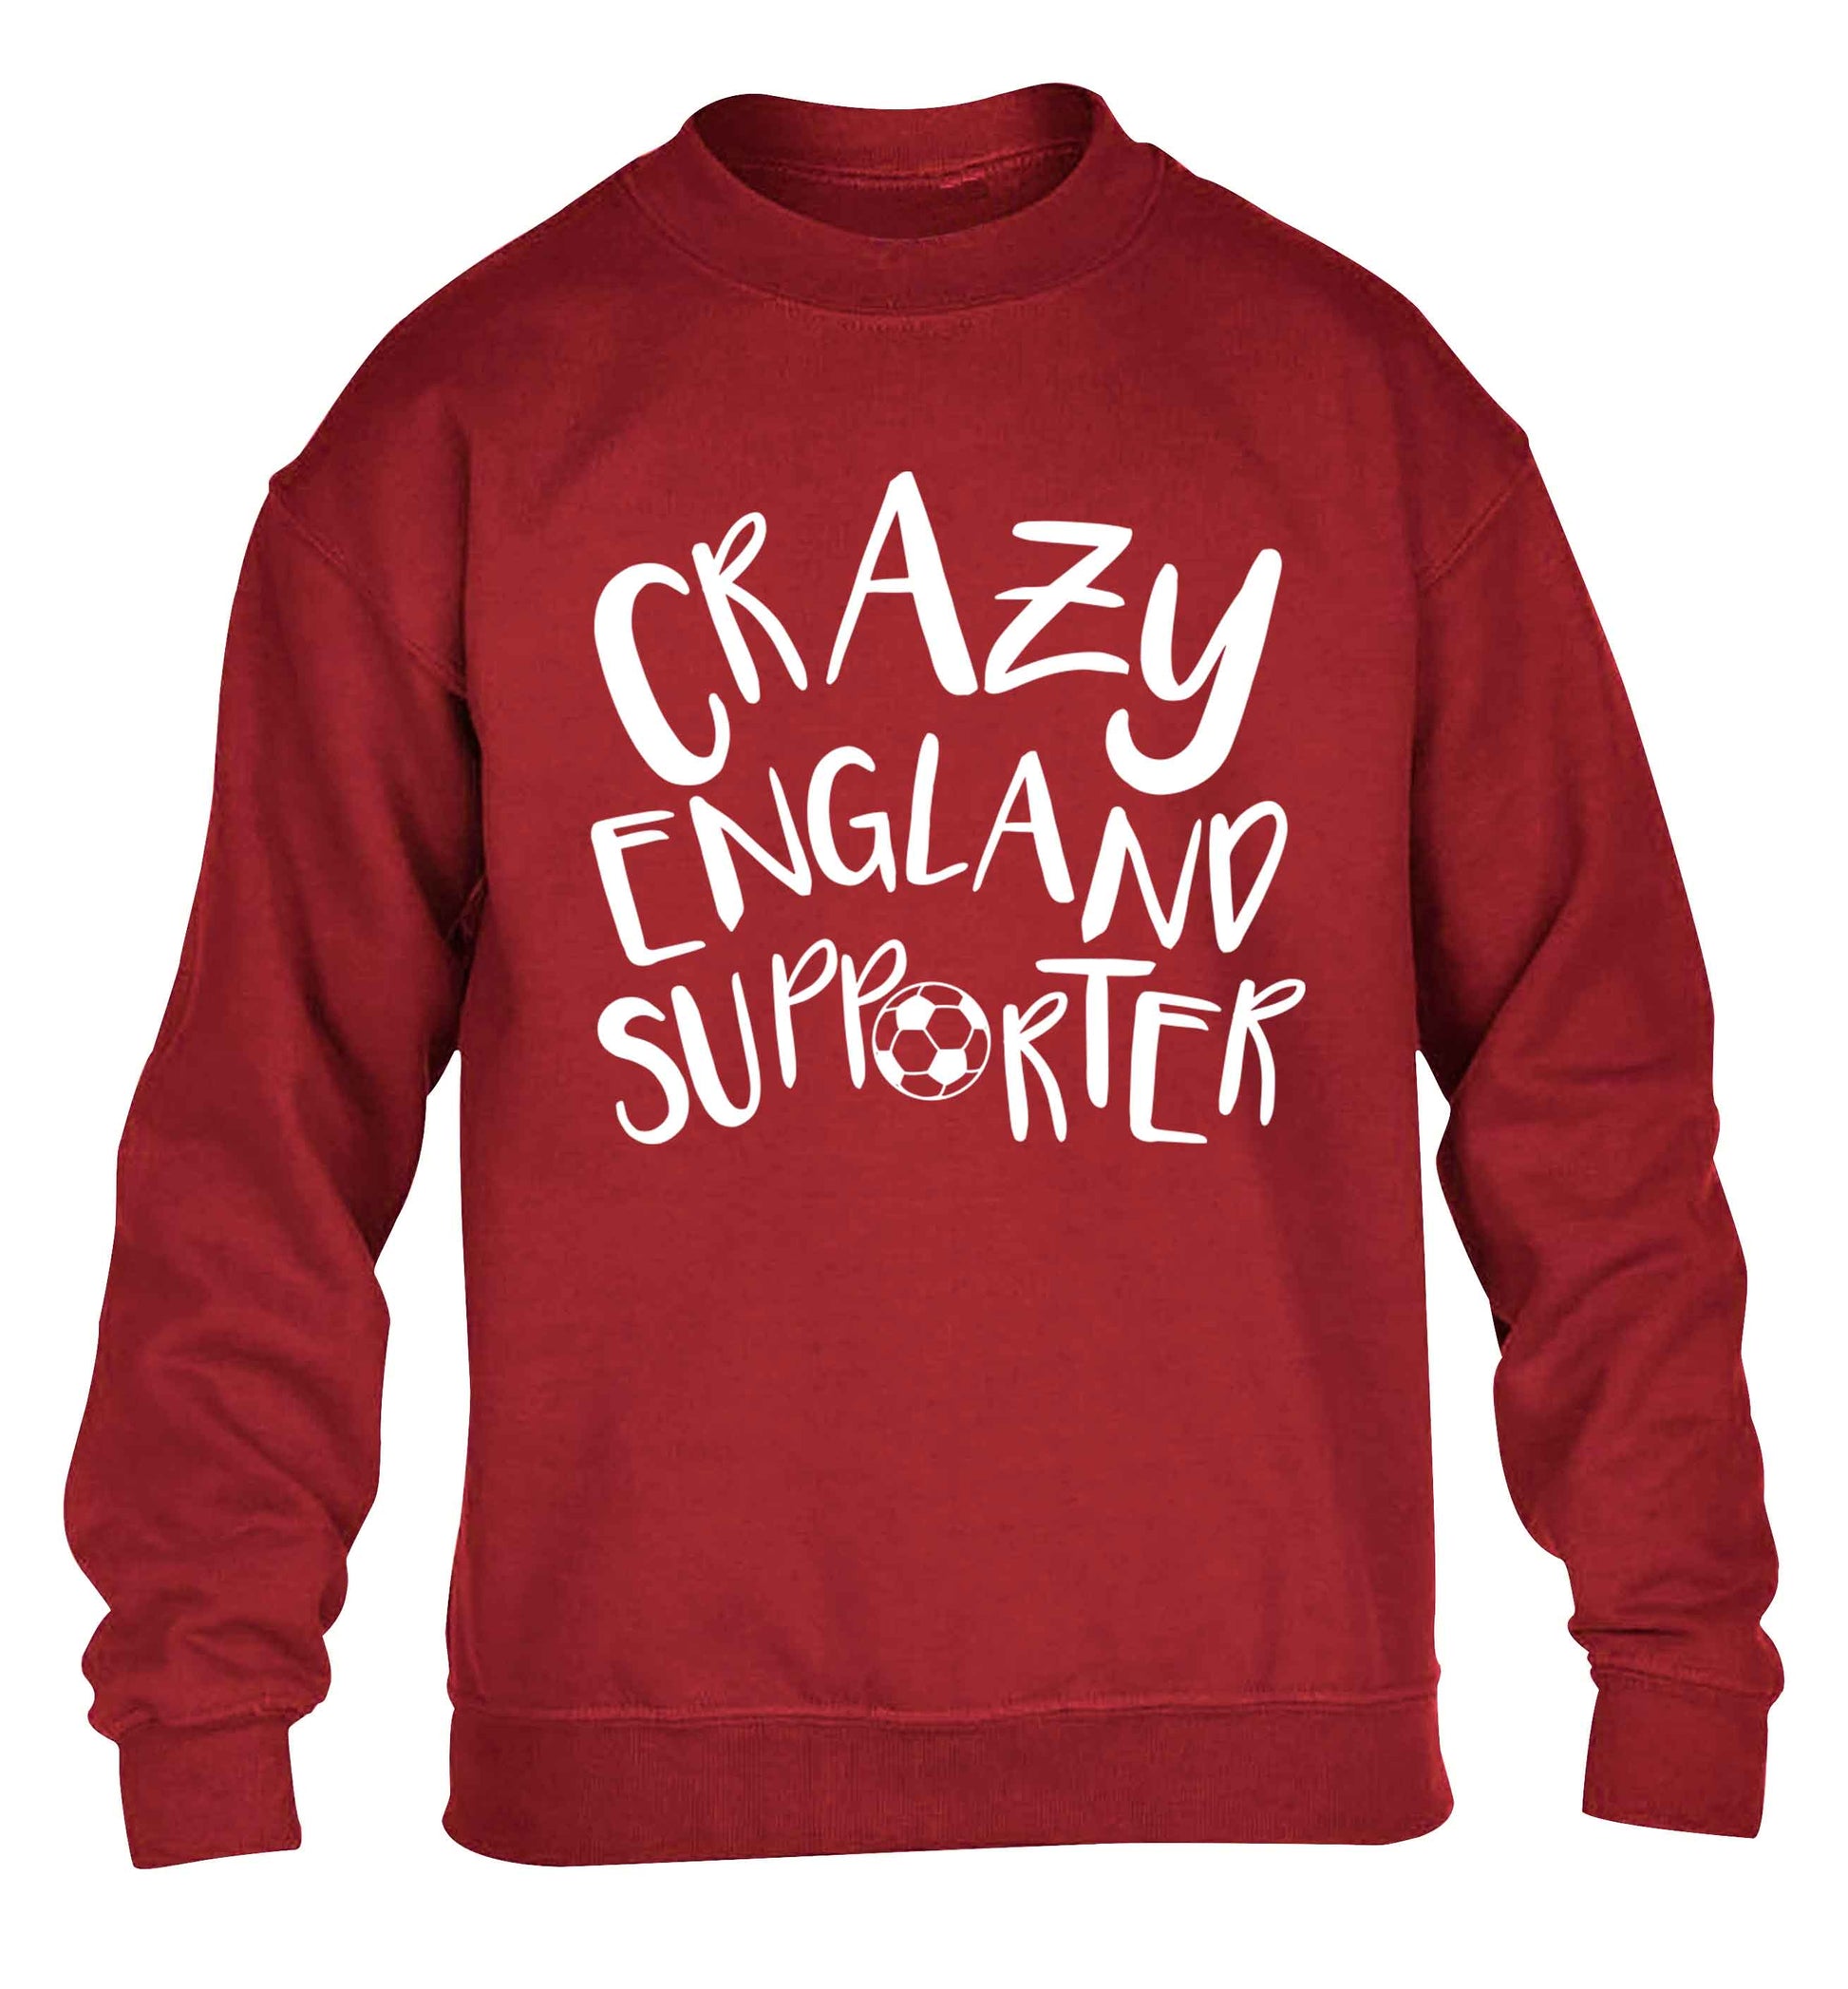 Crazy England supporter children's grey sweater 12-13 Years